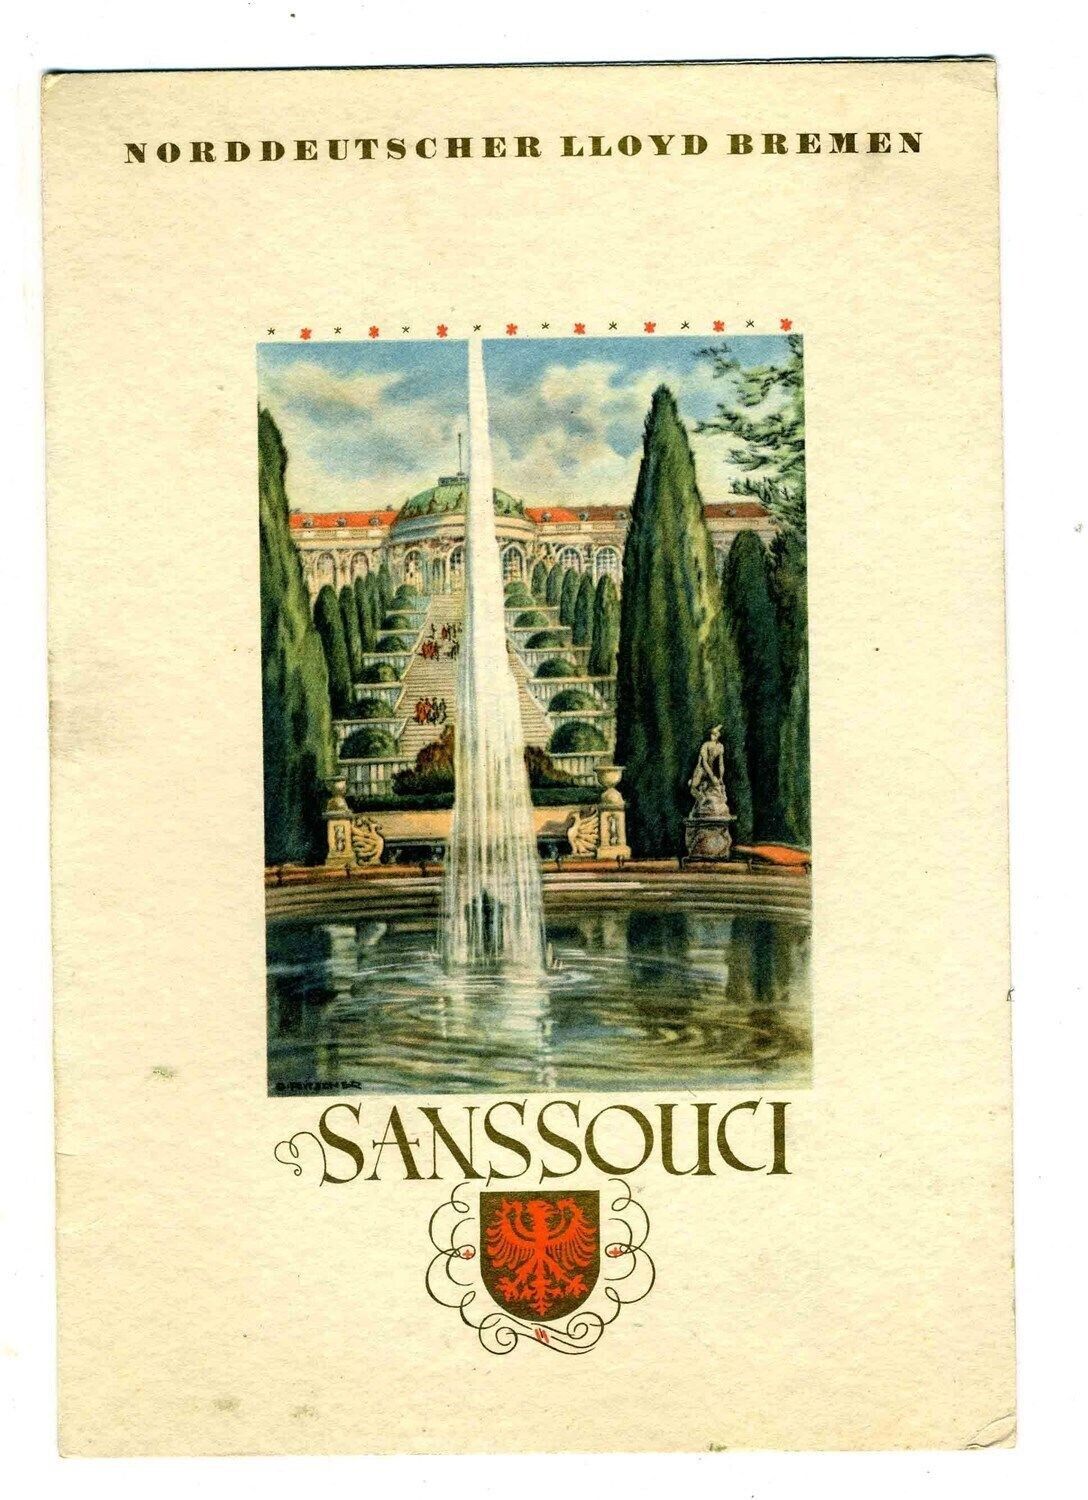 Norddeutscher Lloyd Bremen 1935 S S Europa Menu Sanssouci Cover 